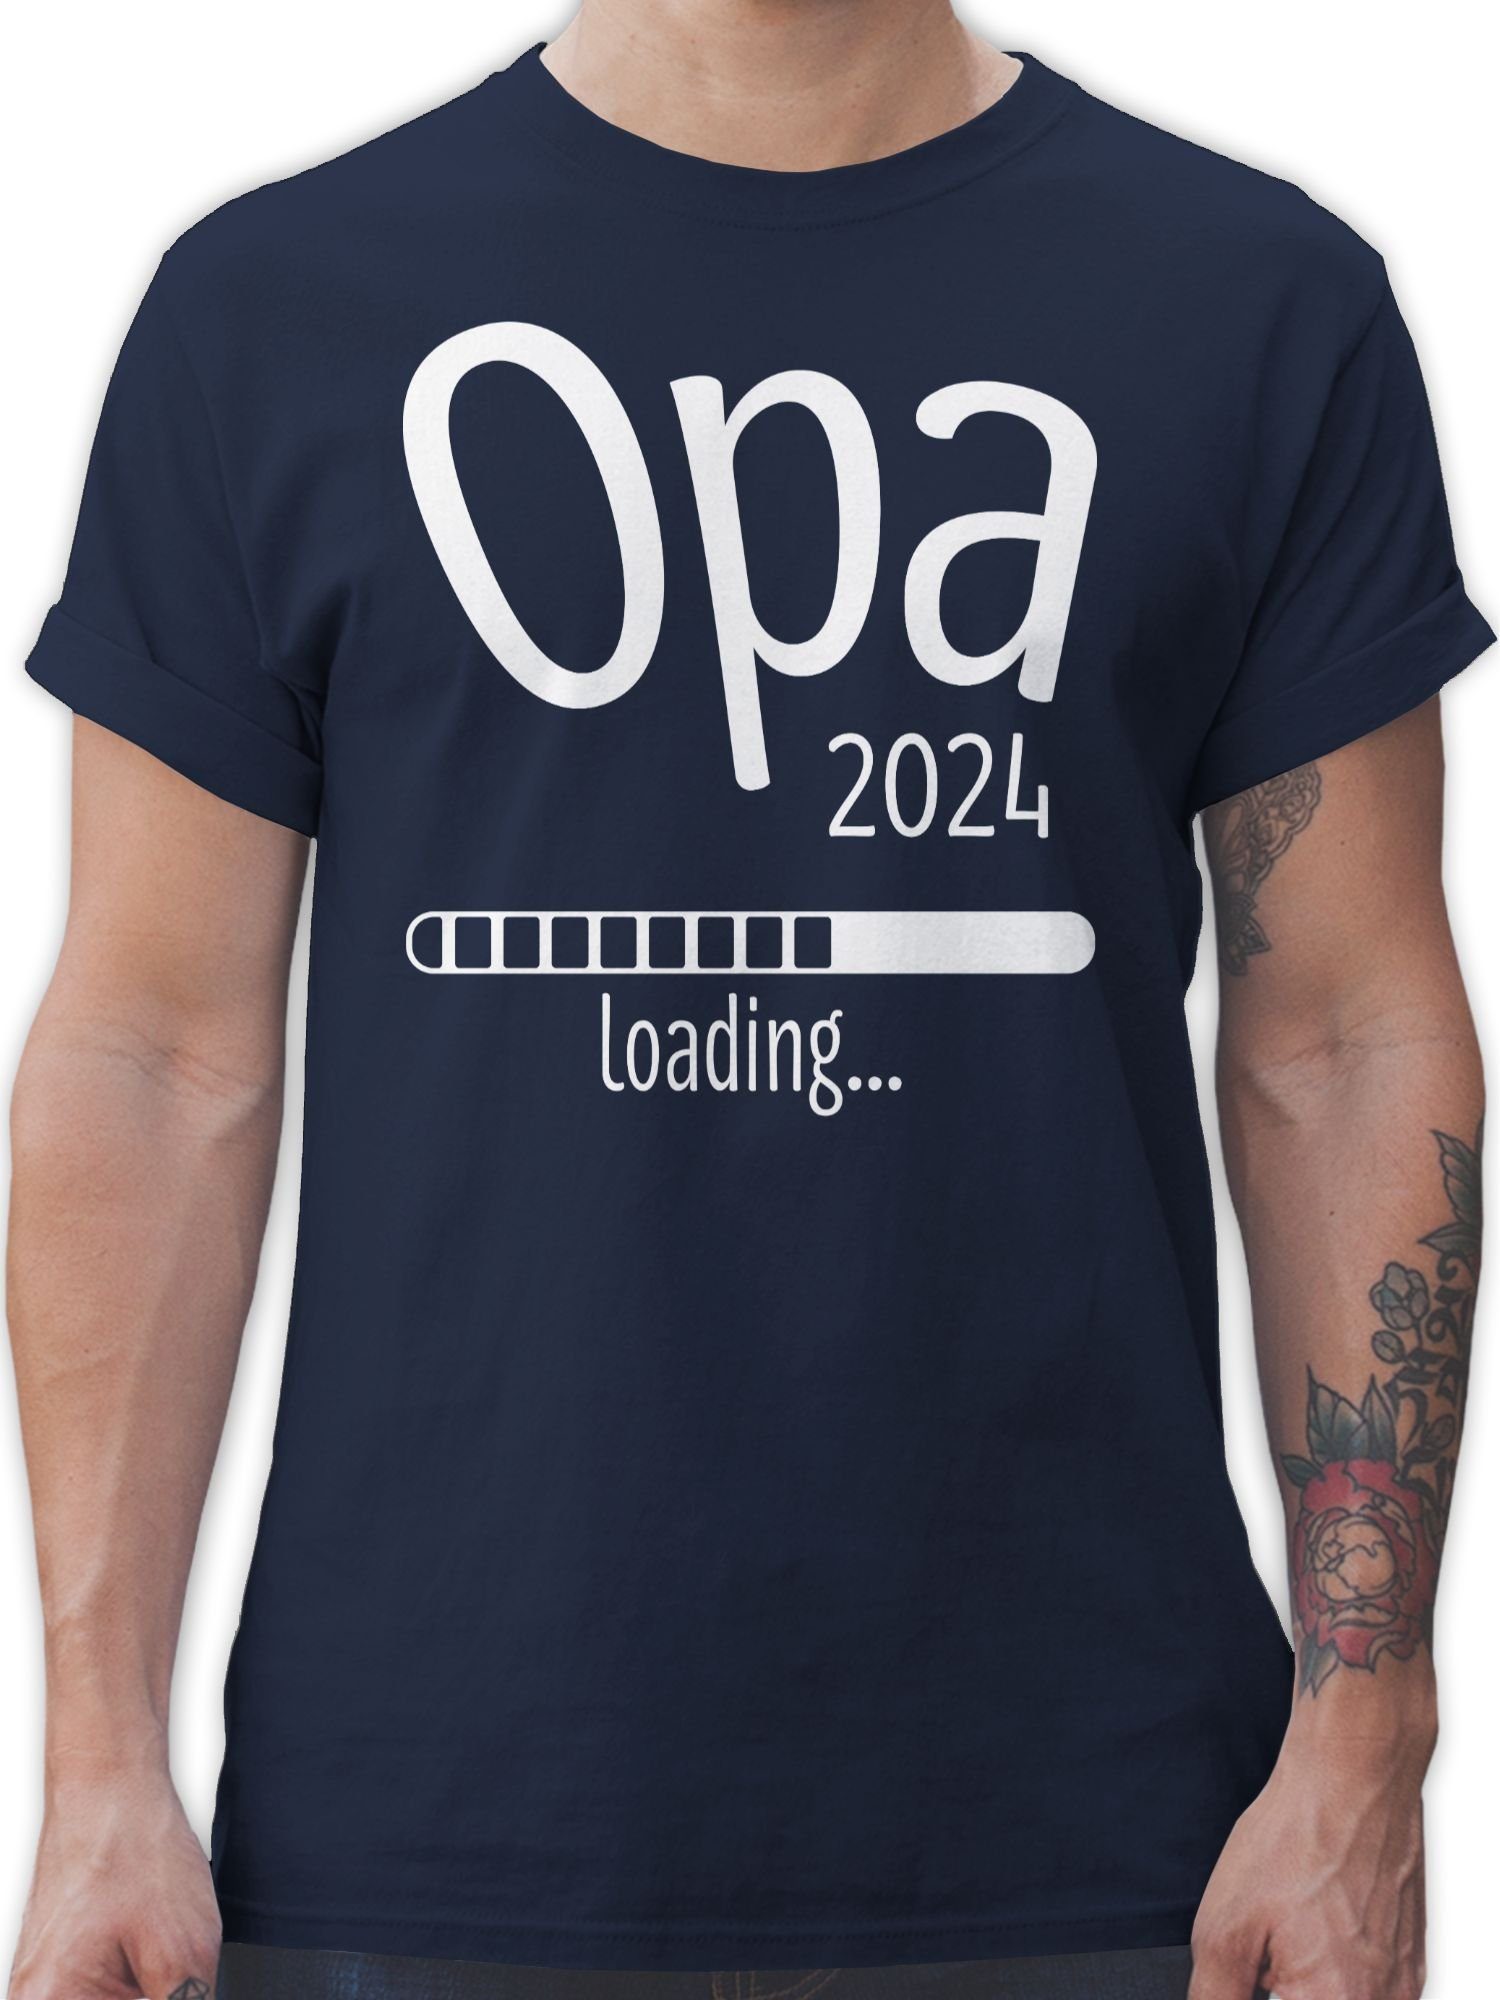 Shirtracer T-Shirt Opa 2024 Navy Opa 2 loading Geschenke Blau